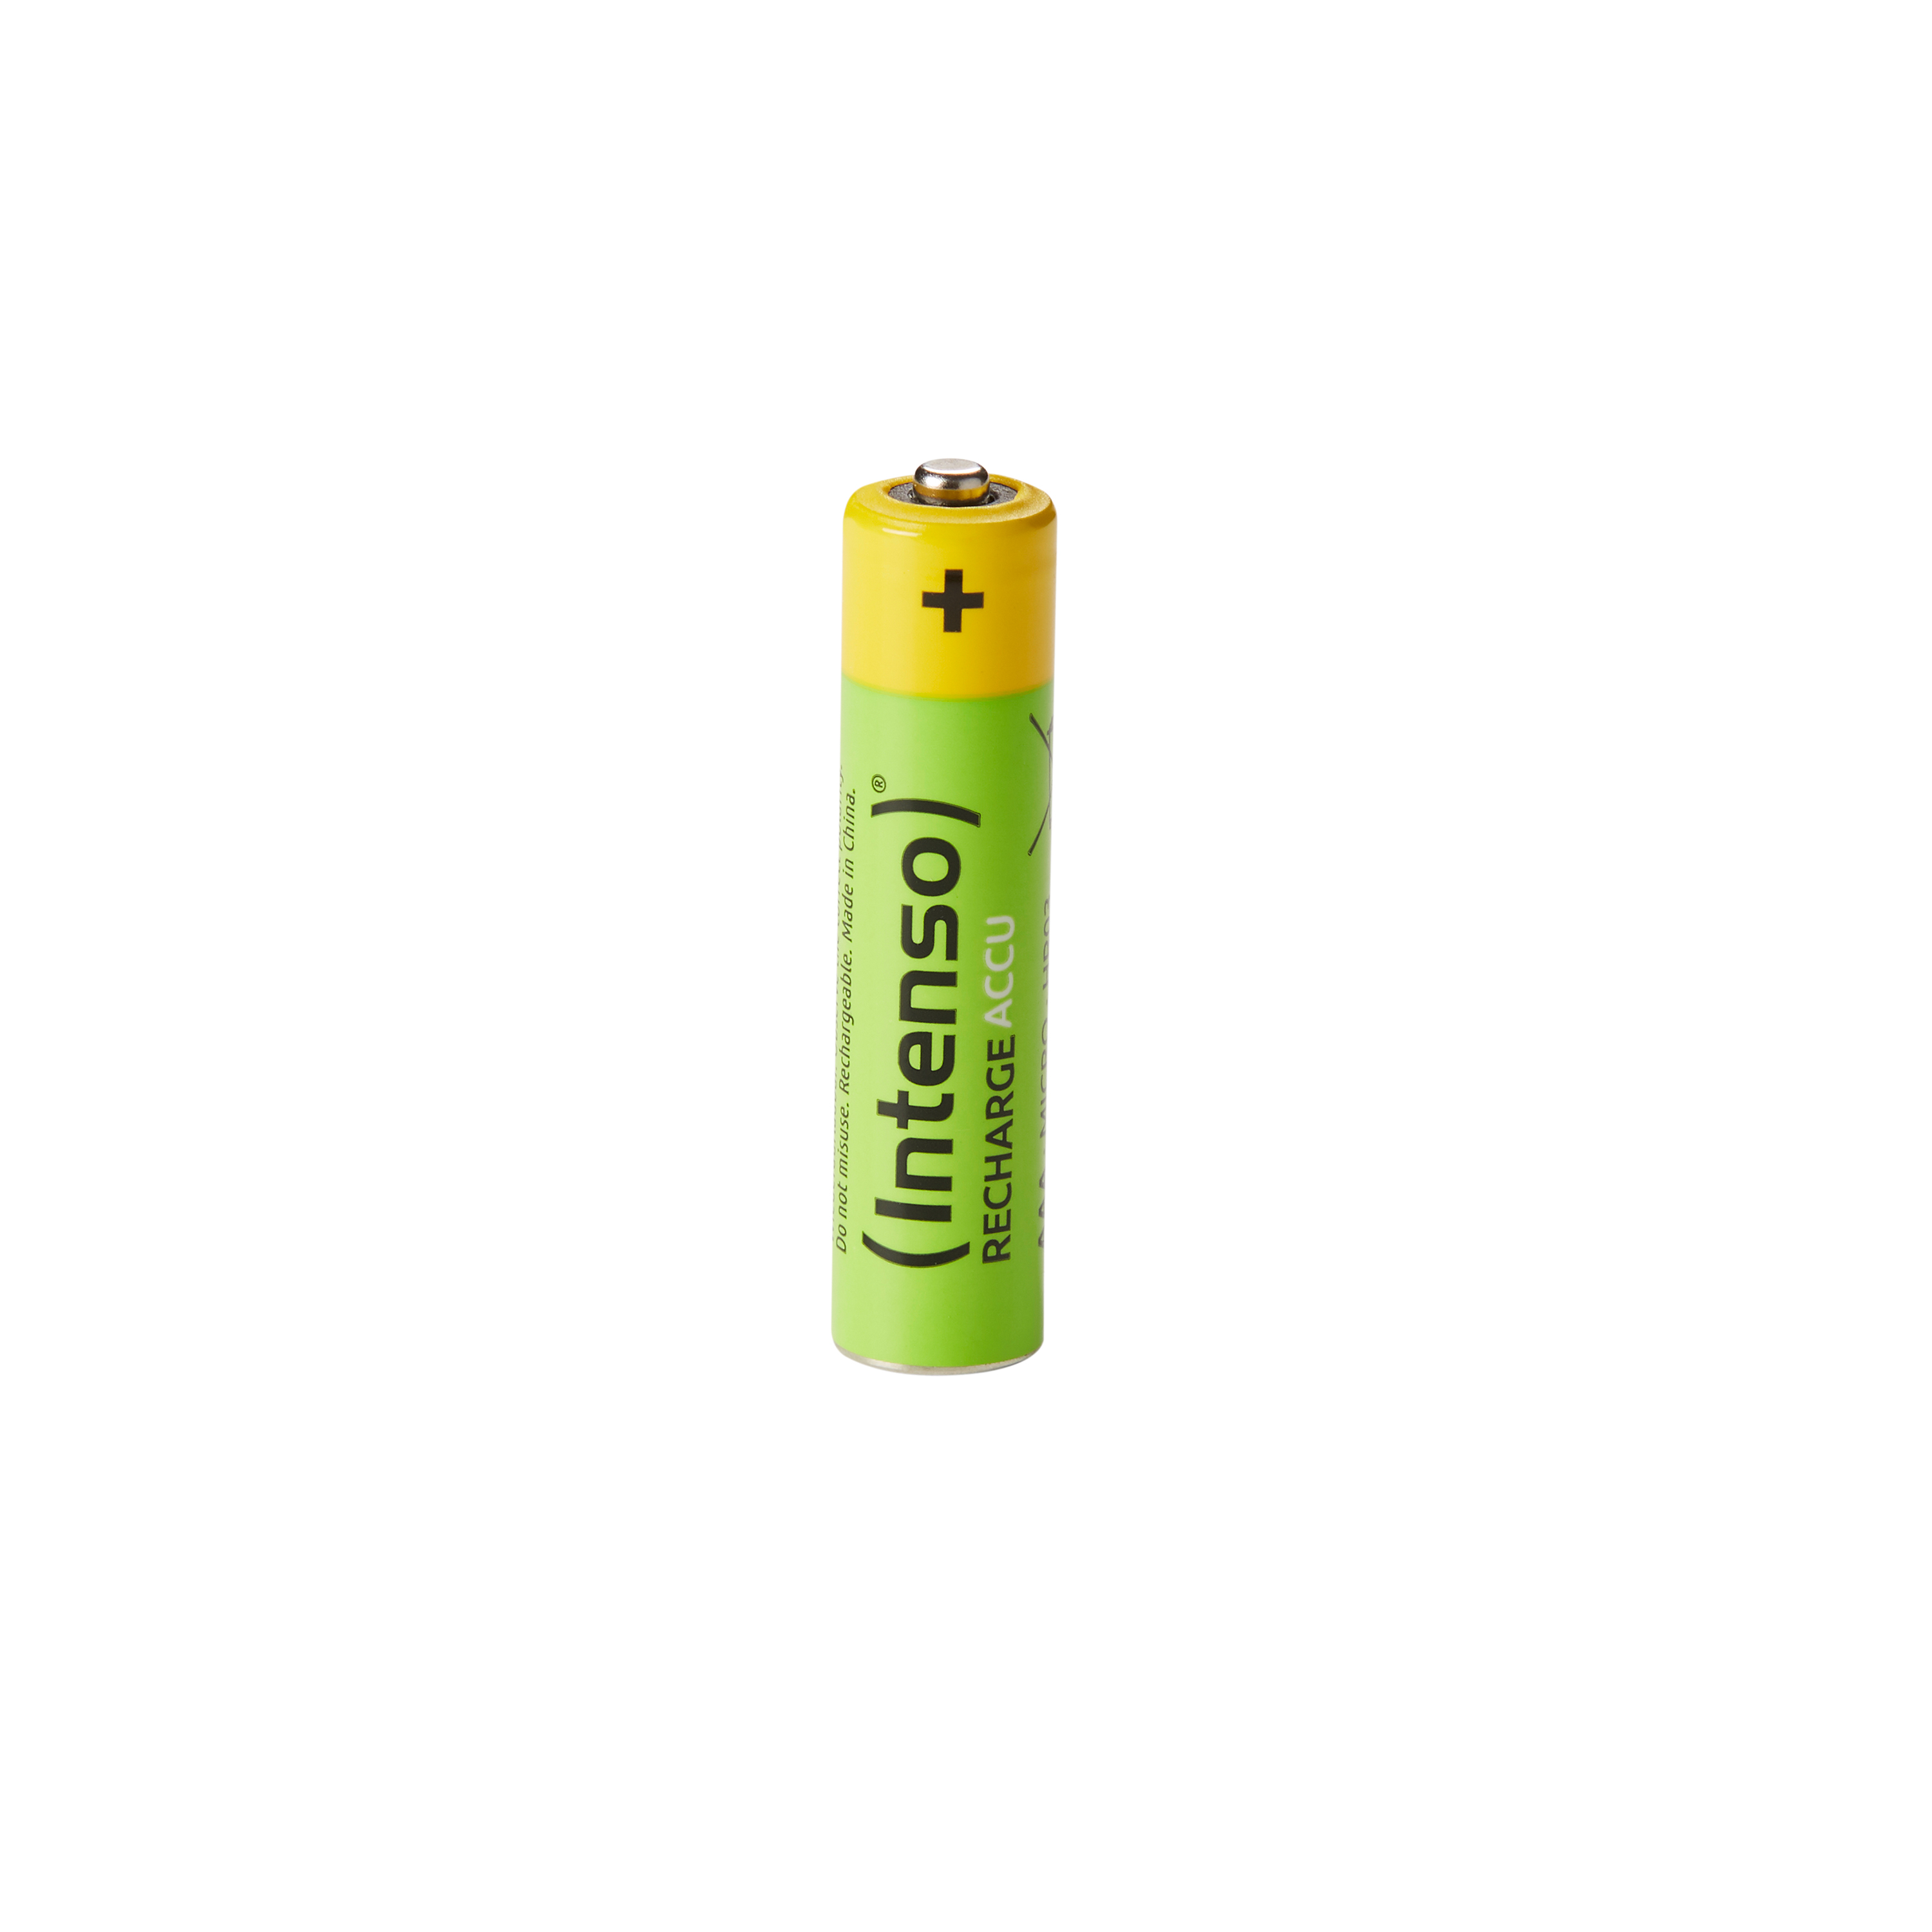 INTENSO Energy Eco Batterie, HR03 Mignon, 850 mAh Batterie HR03, Pack Accu AAA, 850 4er NiMH Wiederaufladbare (Nickel-Metallhydrid) mAh AAA